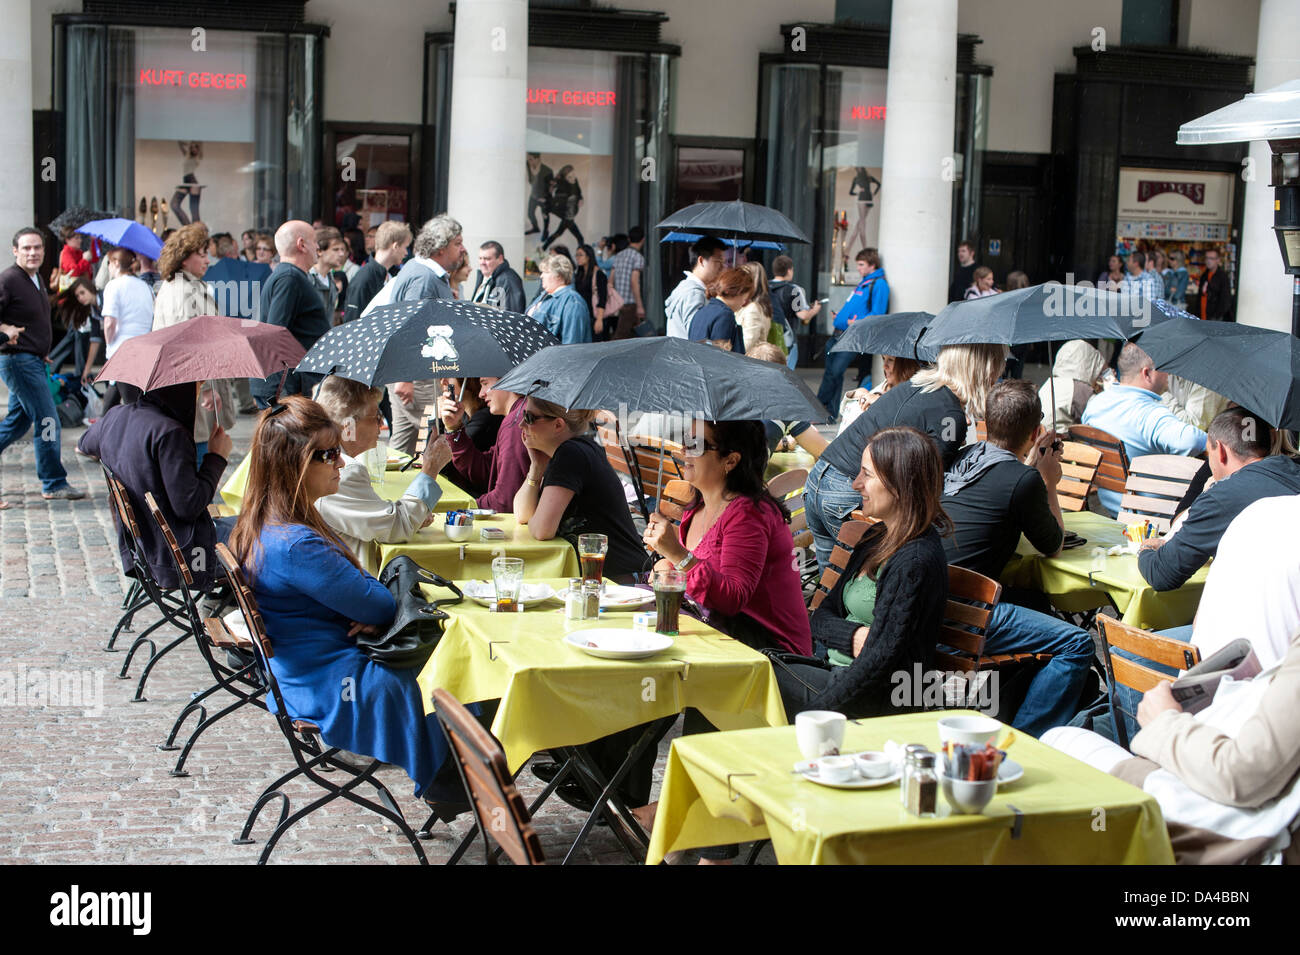 People eating al fresco in Covent garden under umbrellas  during rain shower Stock Photo